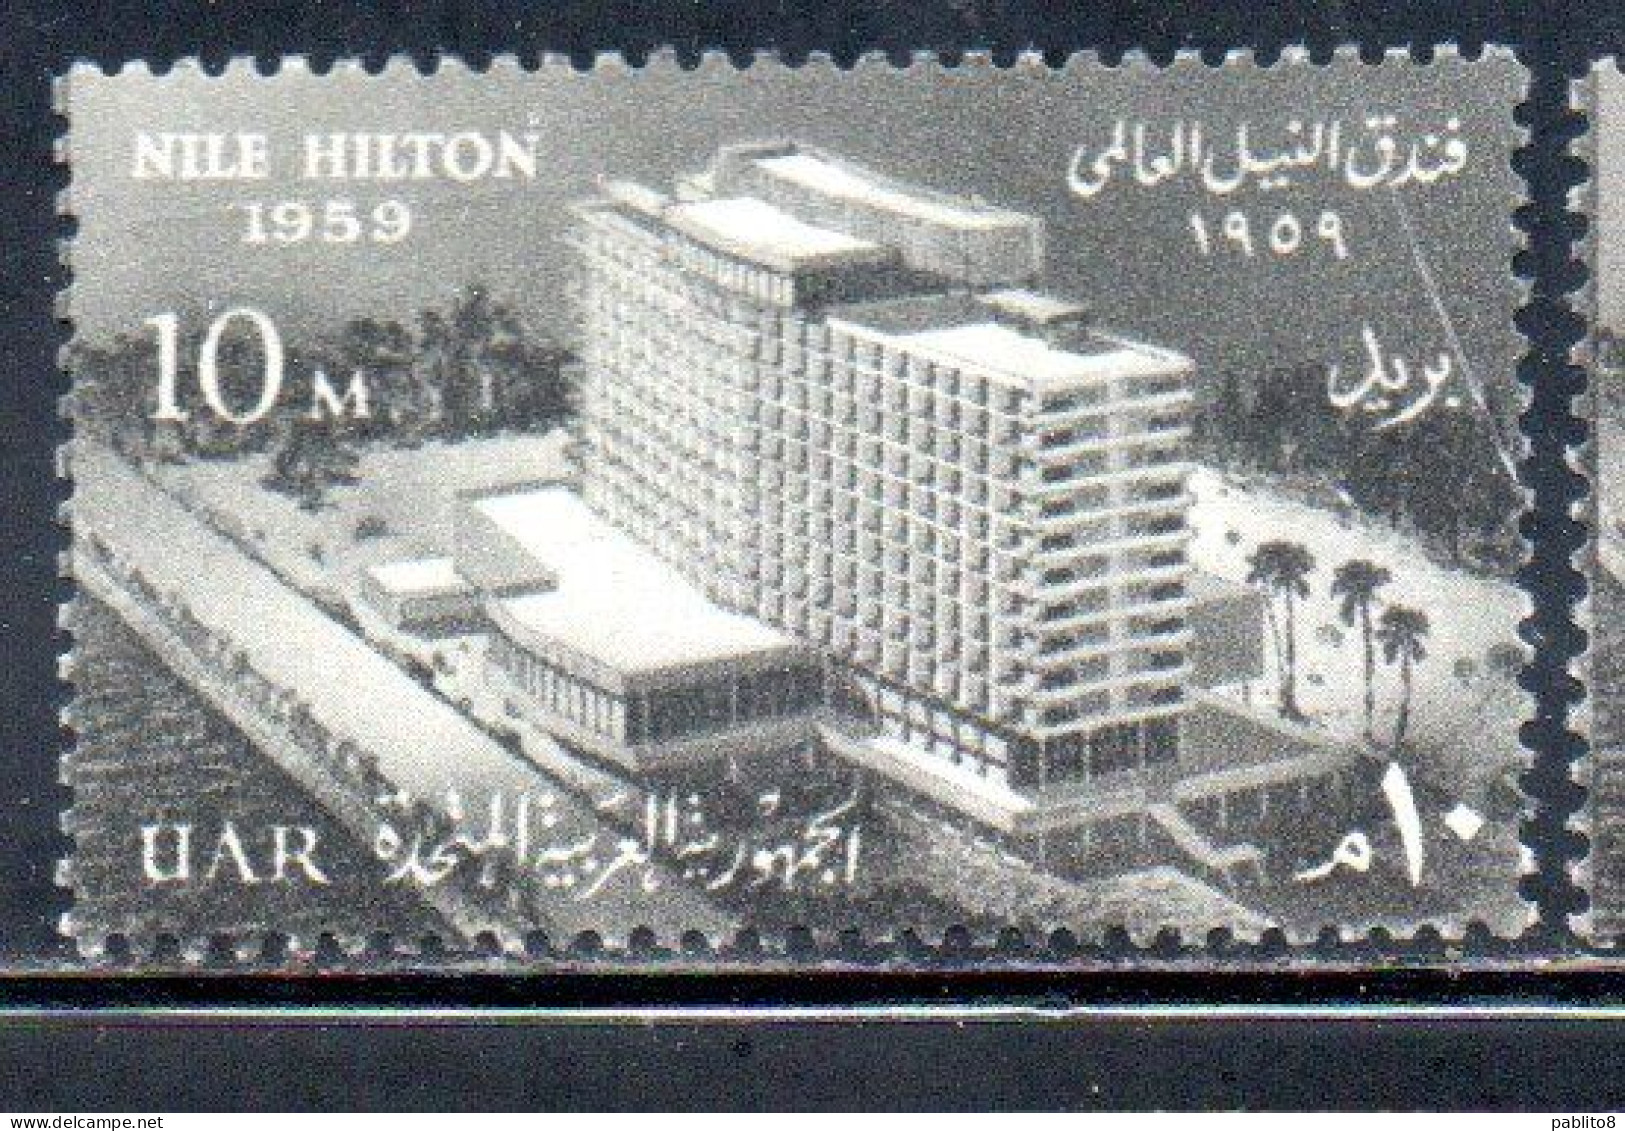 UAR EGYPT EGITTO 1959 OPENING OF THE NILE HILTON HOTEL CAIRO 10m MNH - Unused Stamps